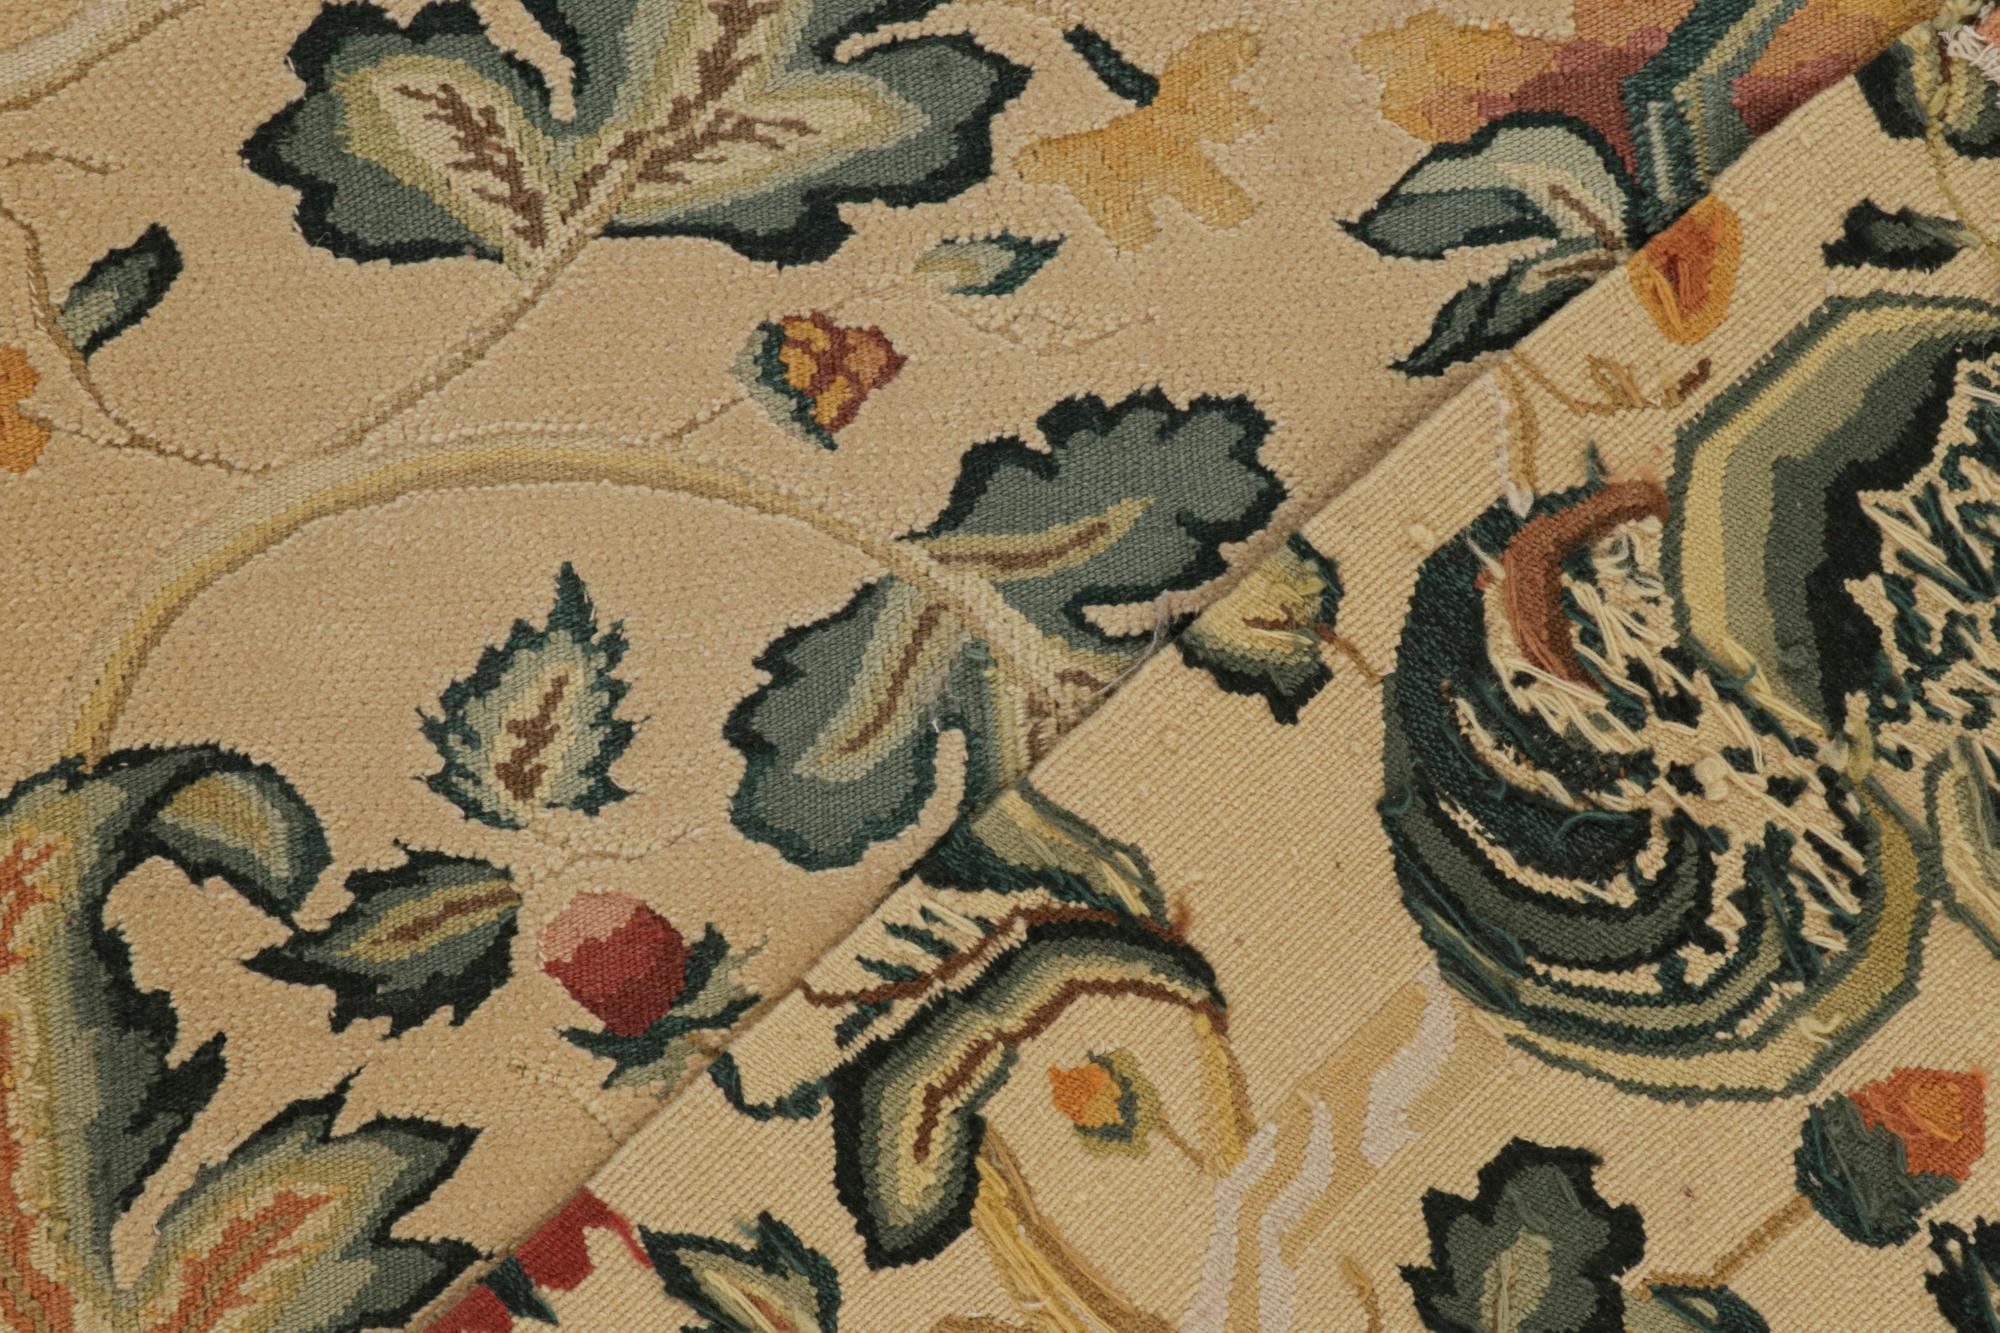 Wool Rug & Kilim’s European Tudor Style Flatweave in Beige with Teal Floral Pattern For Sale